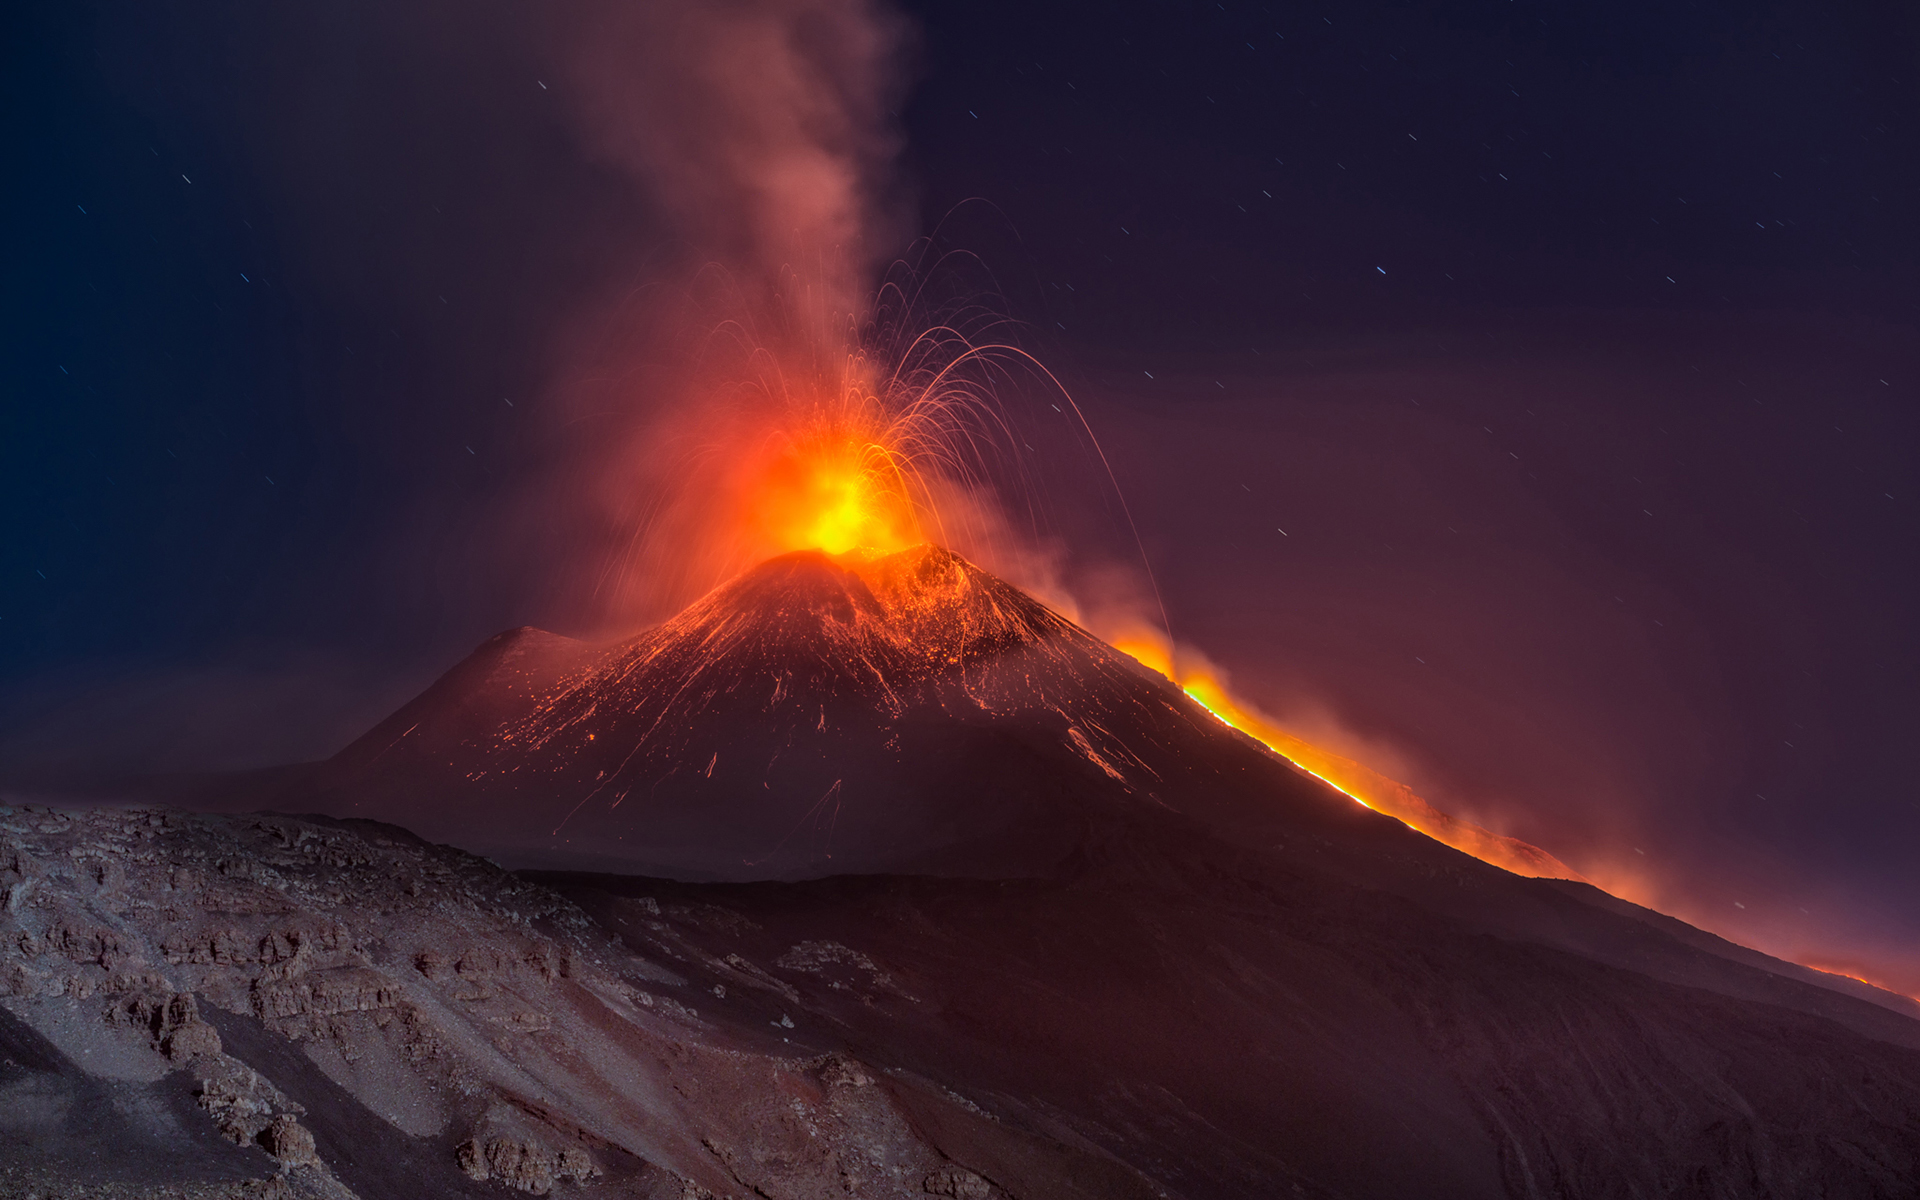 383009 descargar imagen tierra/naturaleza, volcán, erupción, lava, volcanes: fondos de pantalla y protectores de pantalla gratis